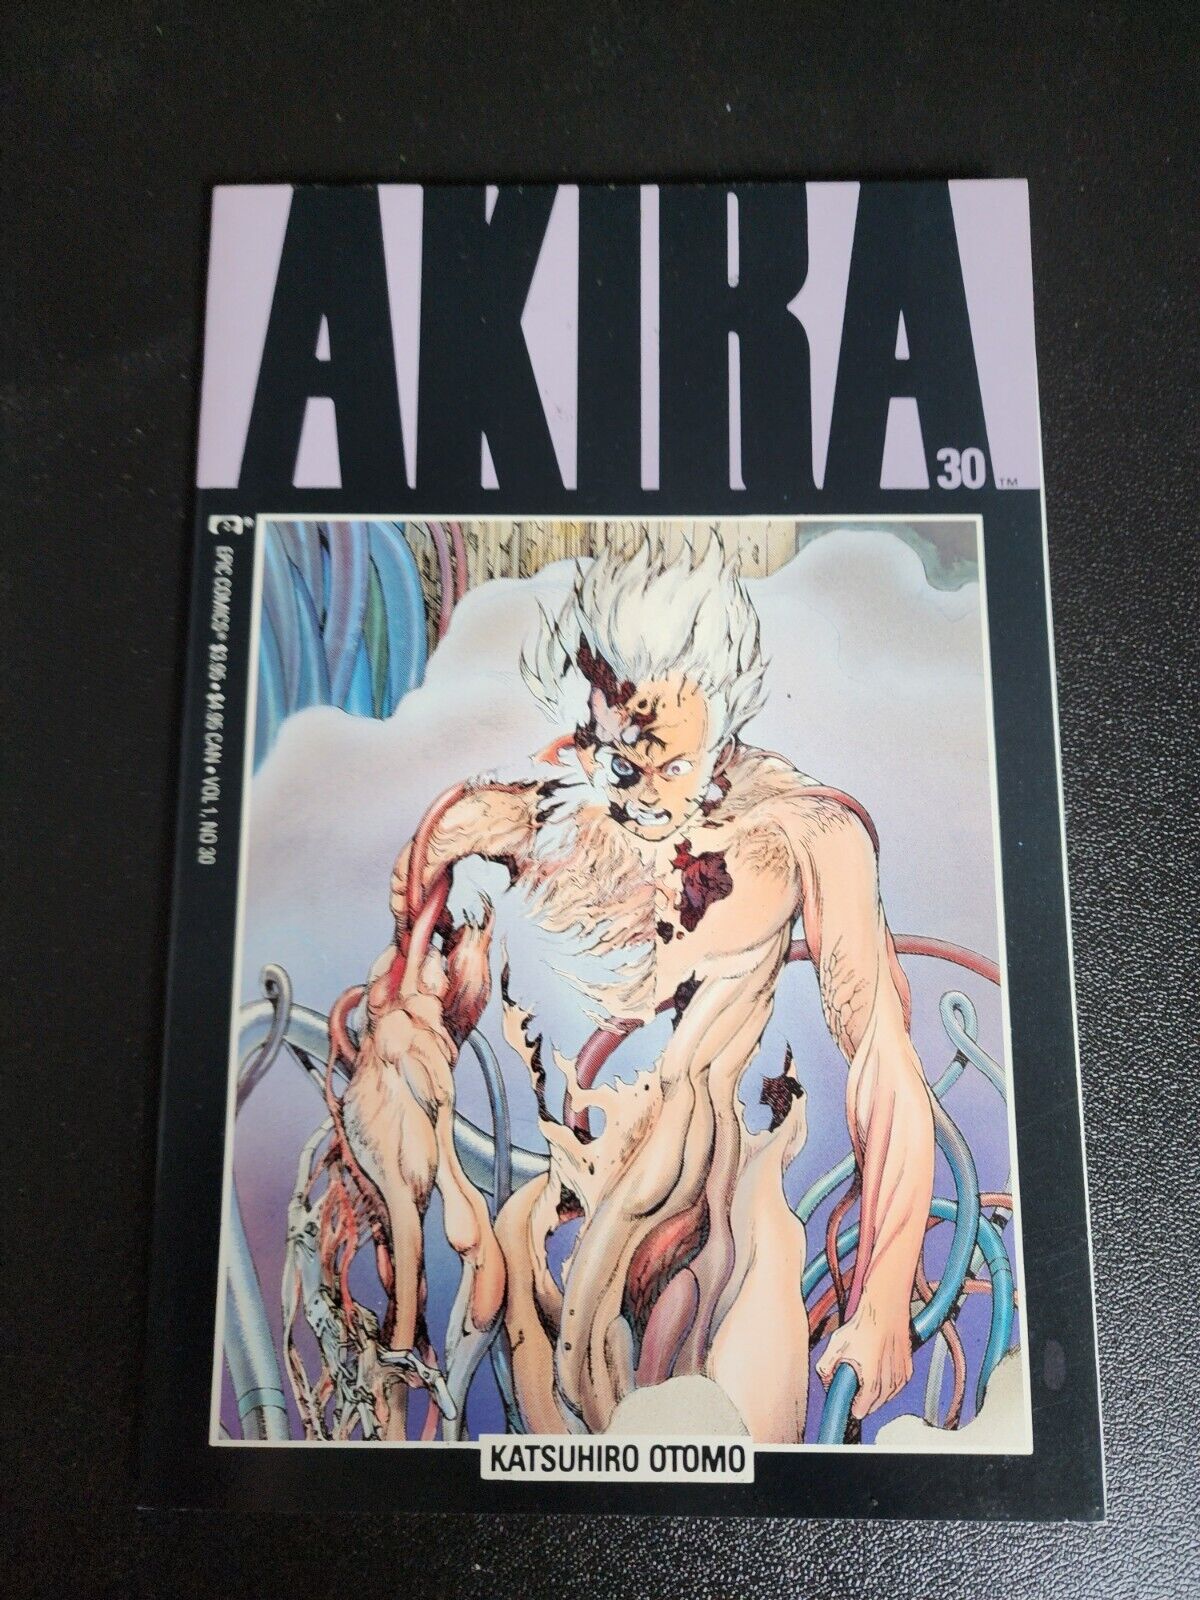 Akira #30 - Katsuhiro Otomo  - 1991 - Epic